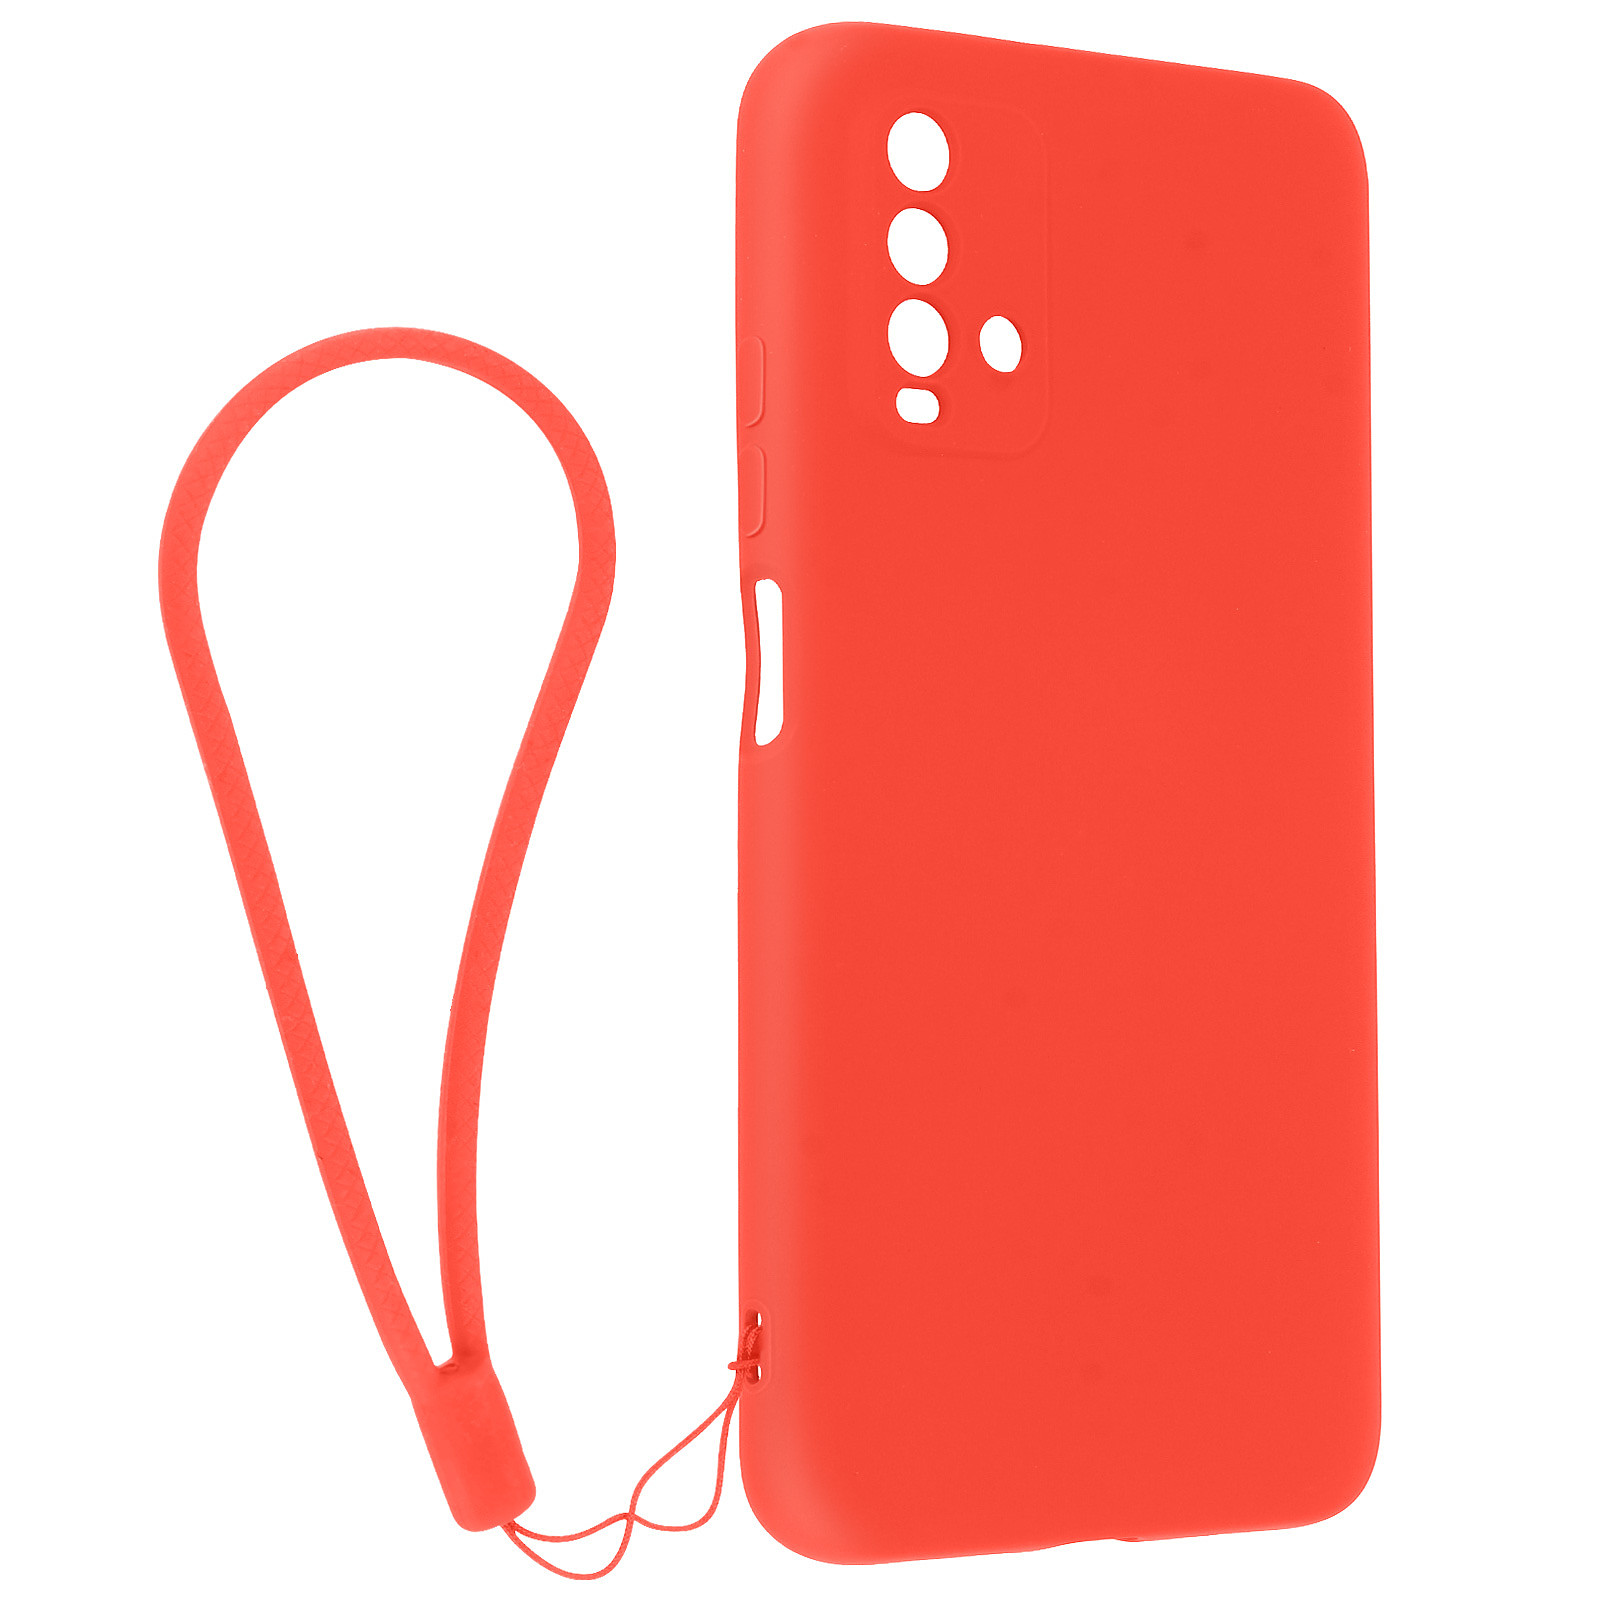 Avizar Coque pour Xiaomi Redmi 9T Silicone Gel Semi-rigide avec Dragonne Rouge - Coque telephone Avizar